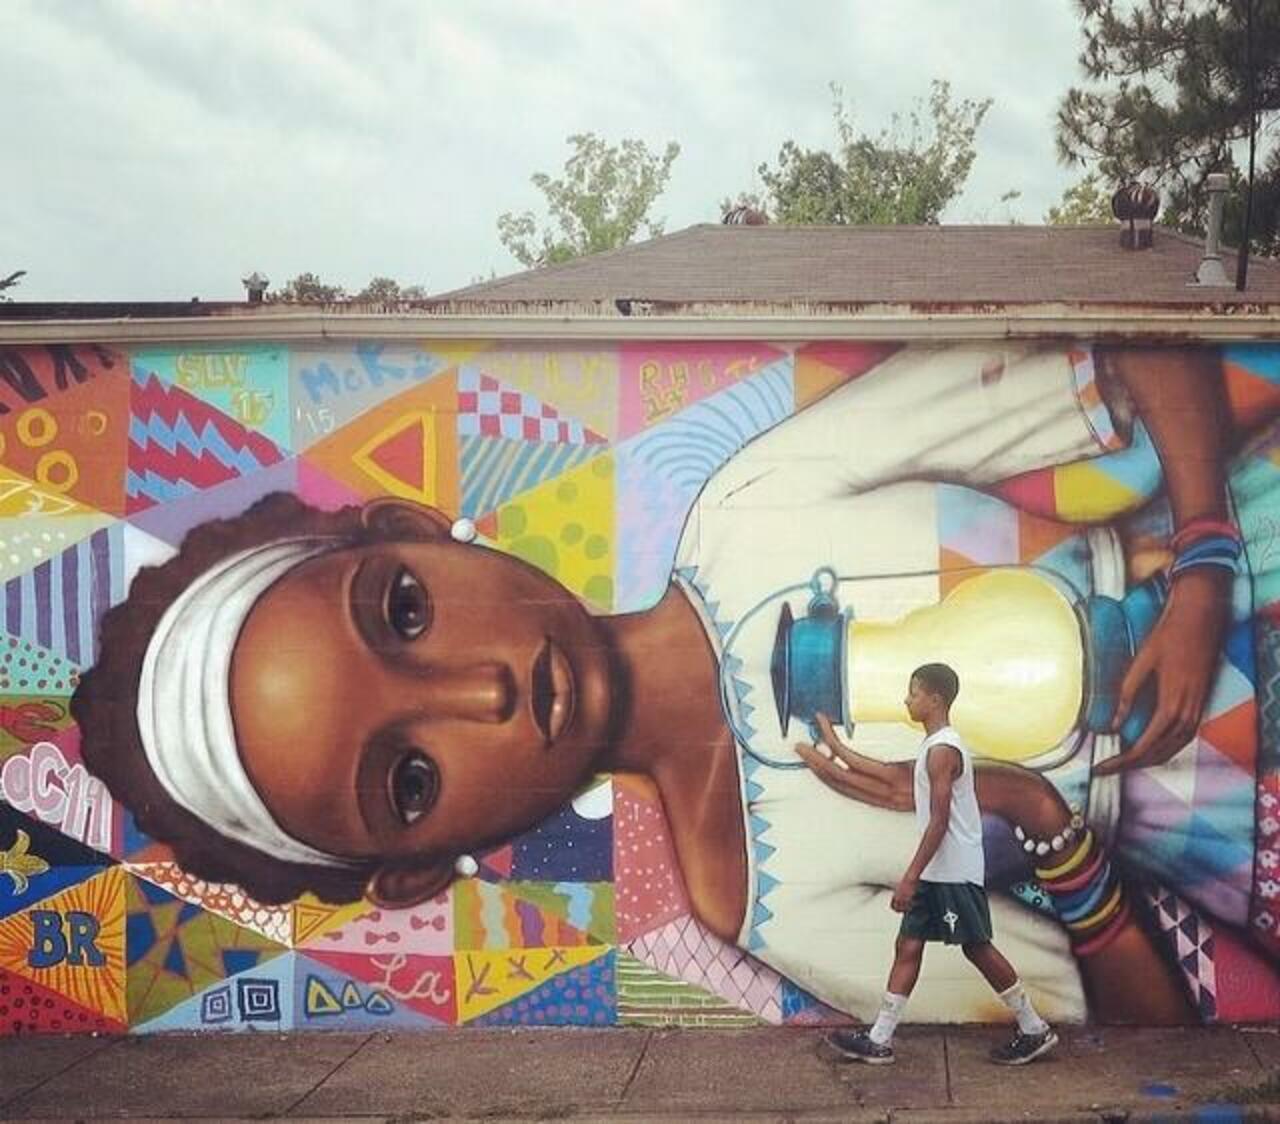 Artist #Seth recent wonderful Street Art wall in Baton Rouge, Louisiana, USA #art #mural #graffiti #streetart http://t.co/N4GF9XdXPa